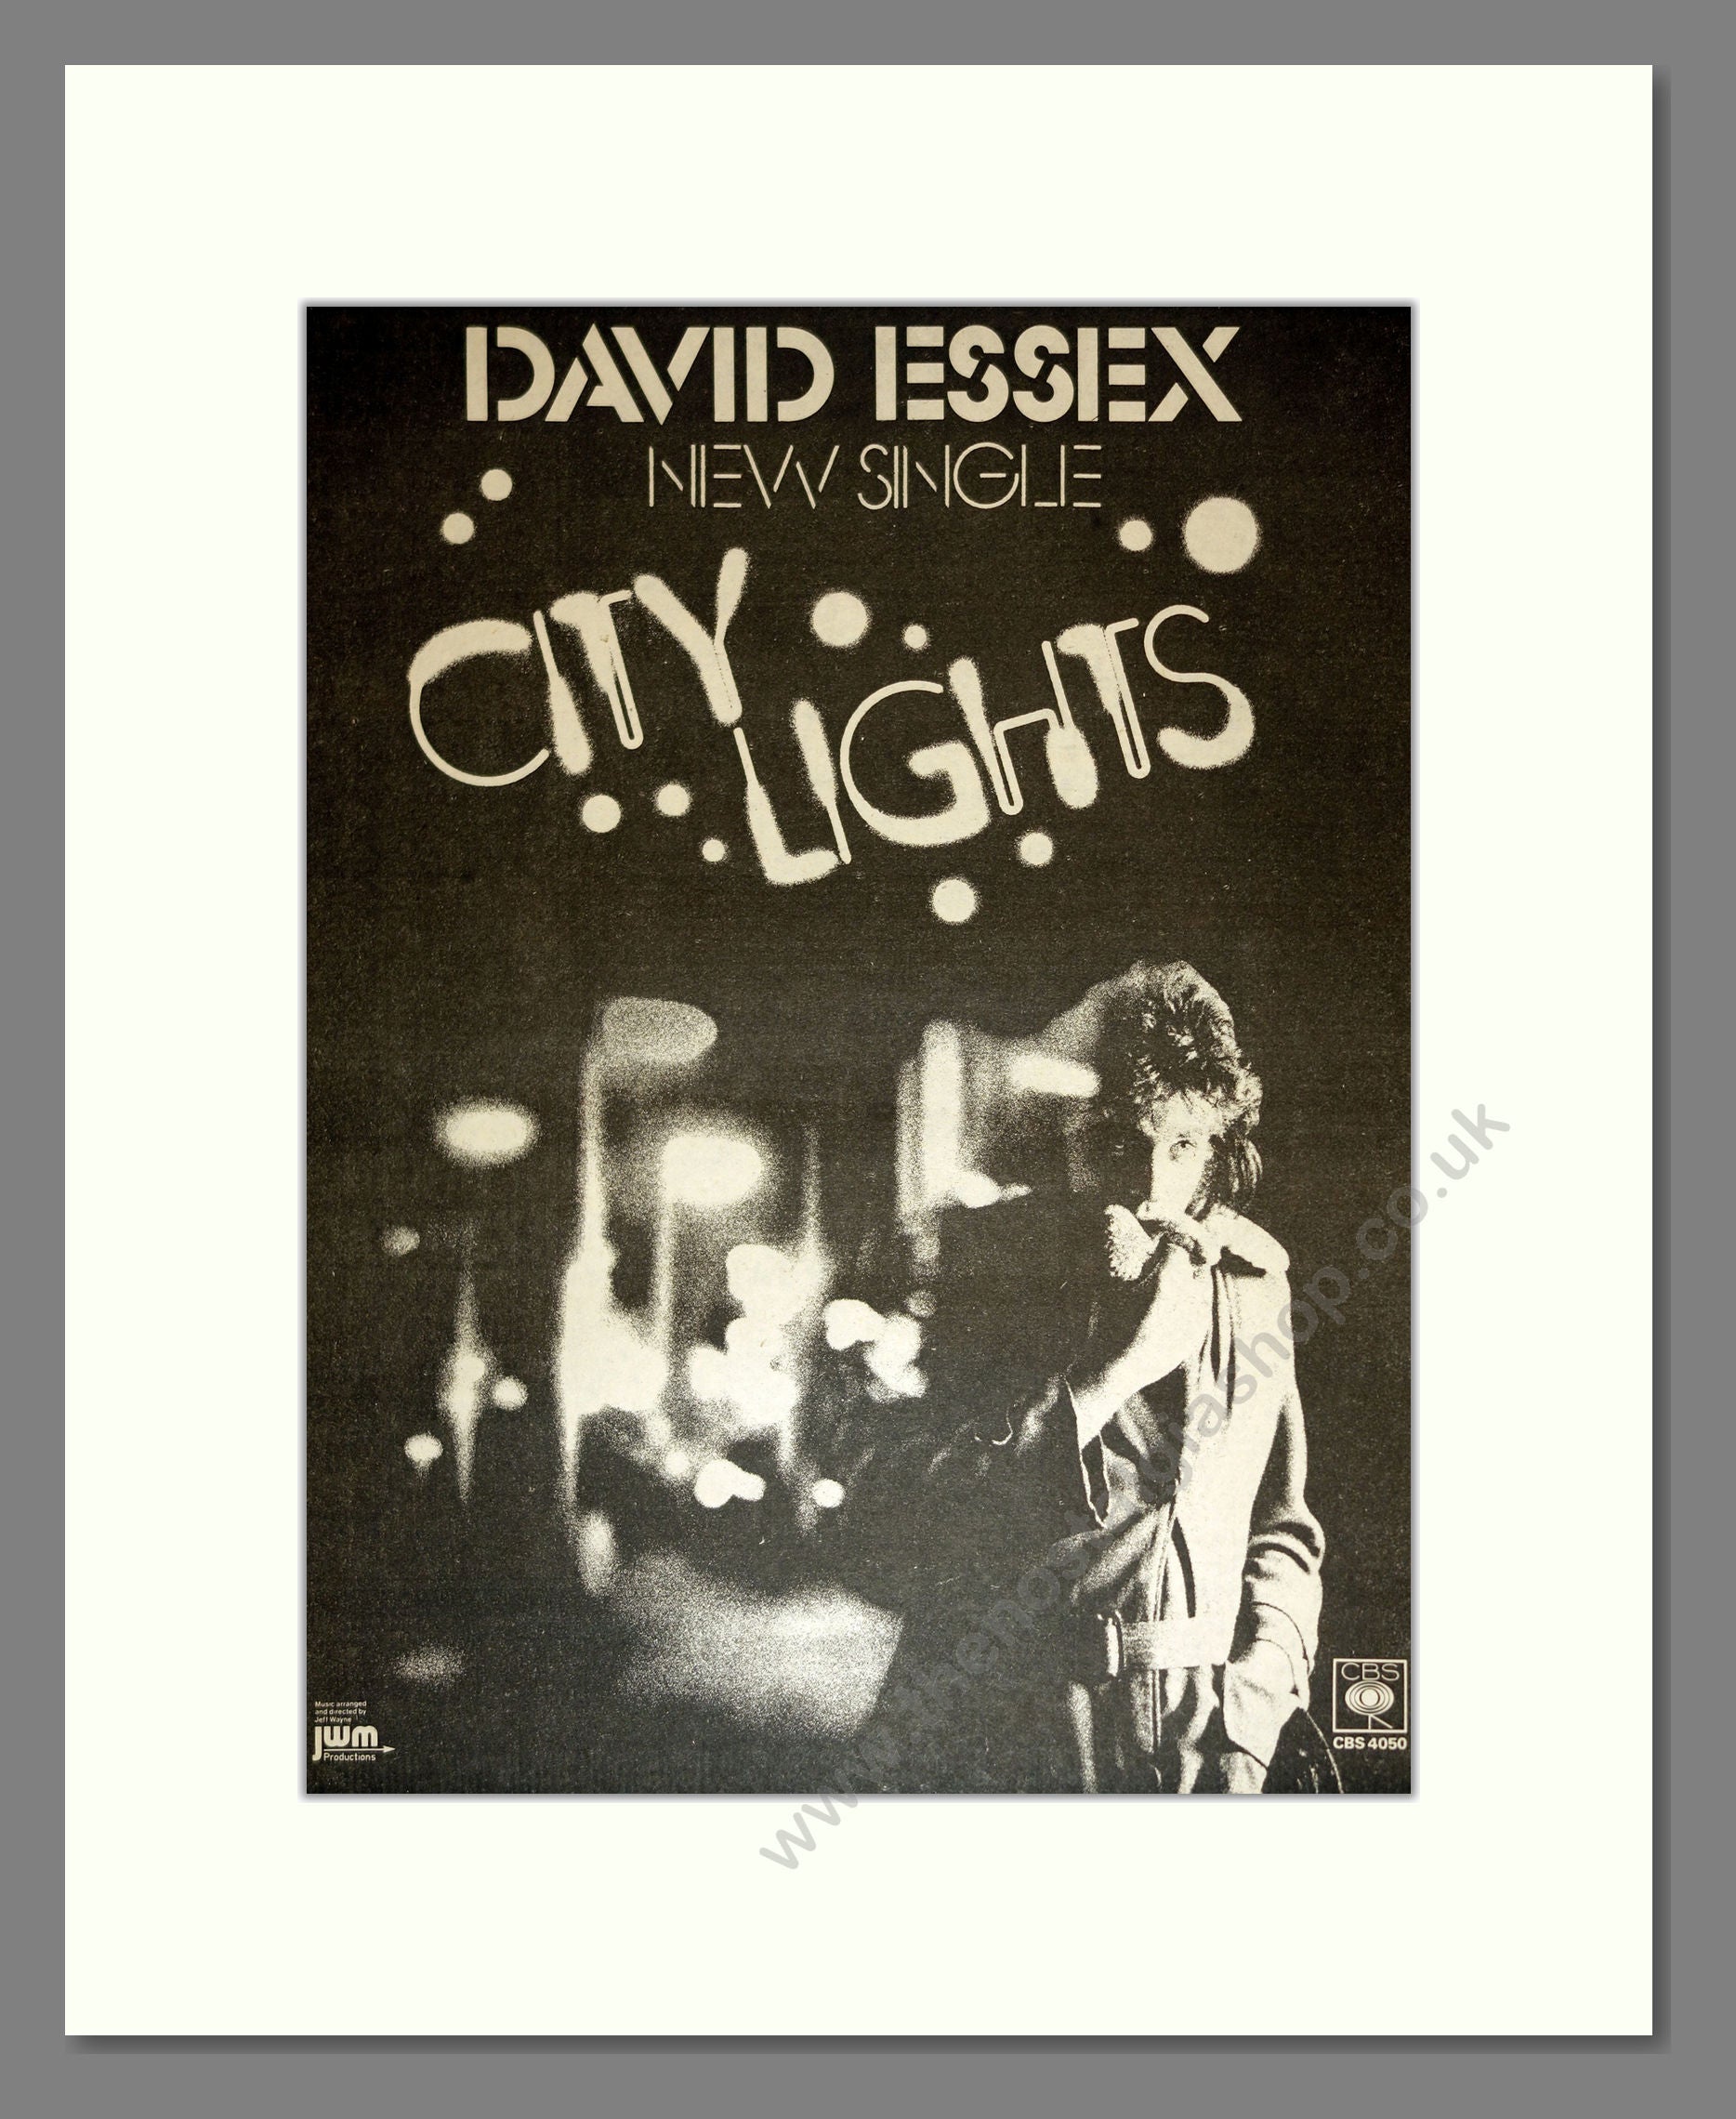 David Essex - City Lights. Vintage Advert 1976 (ref AD17173)